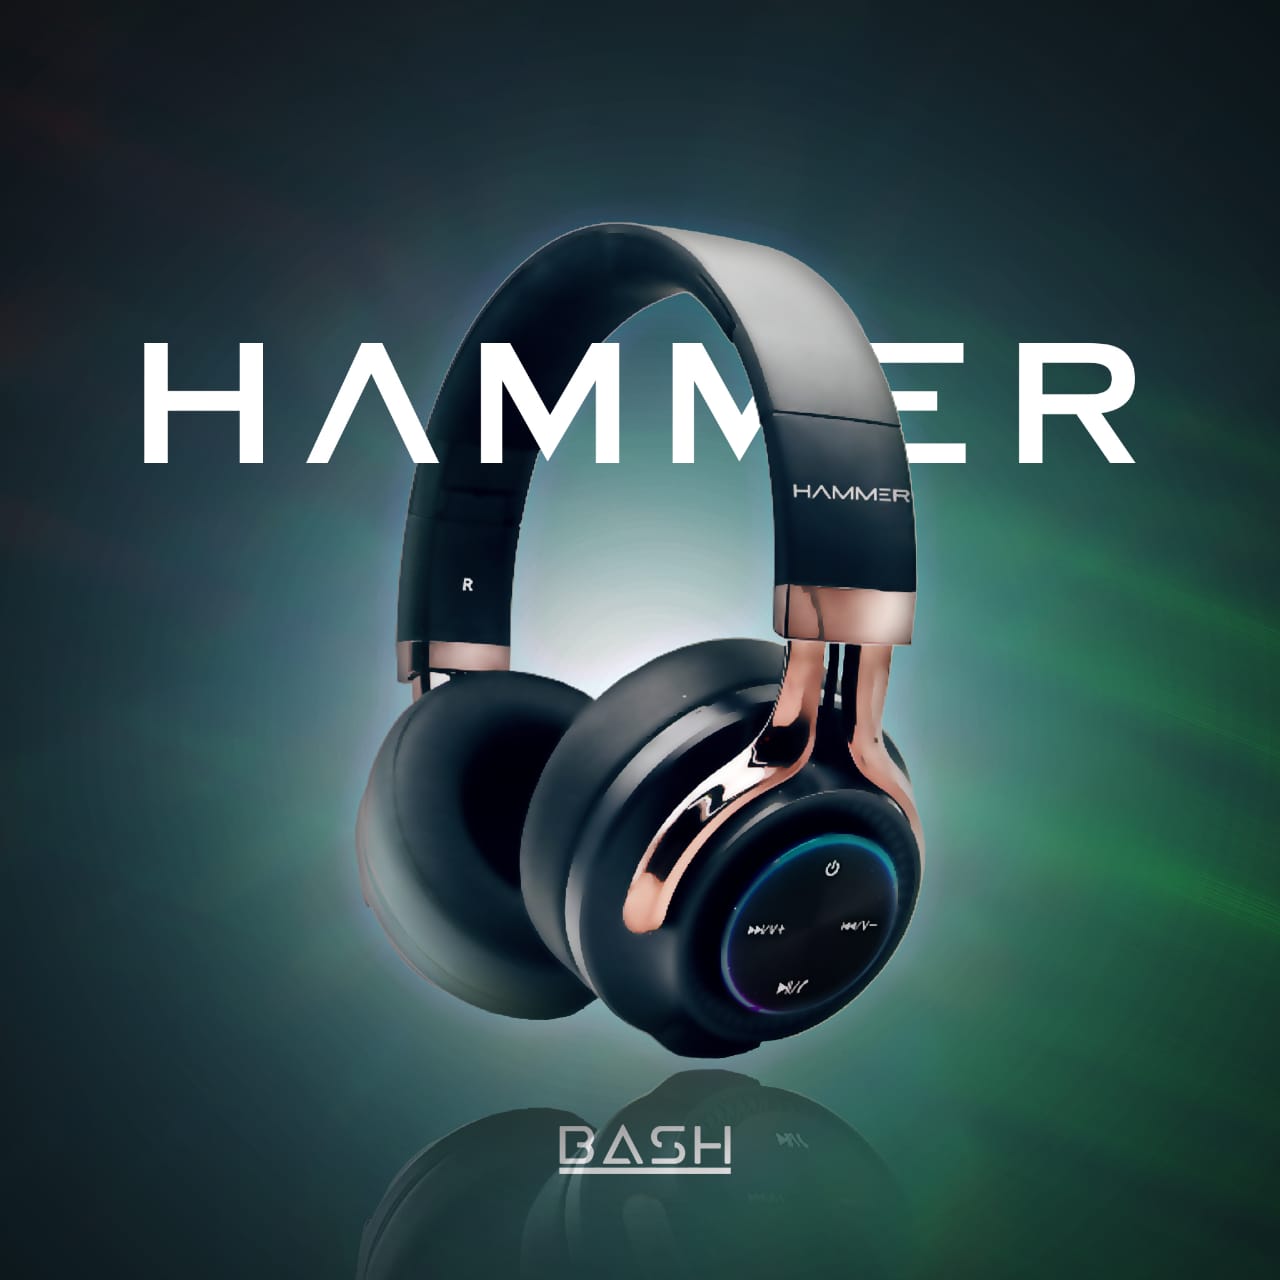 Hammer Bash Wireless Headphones